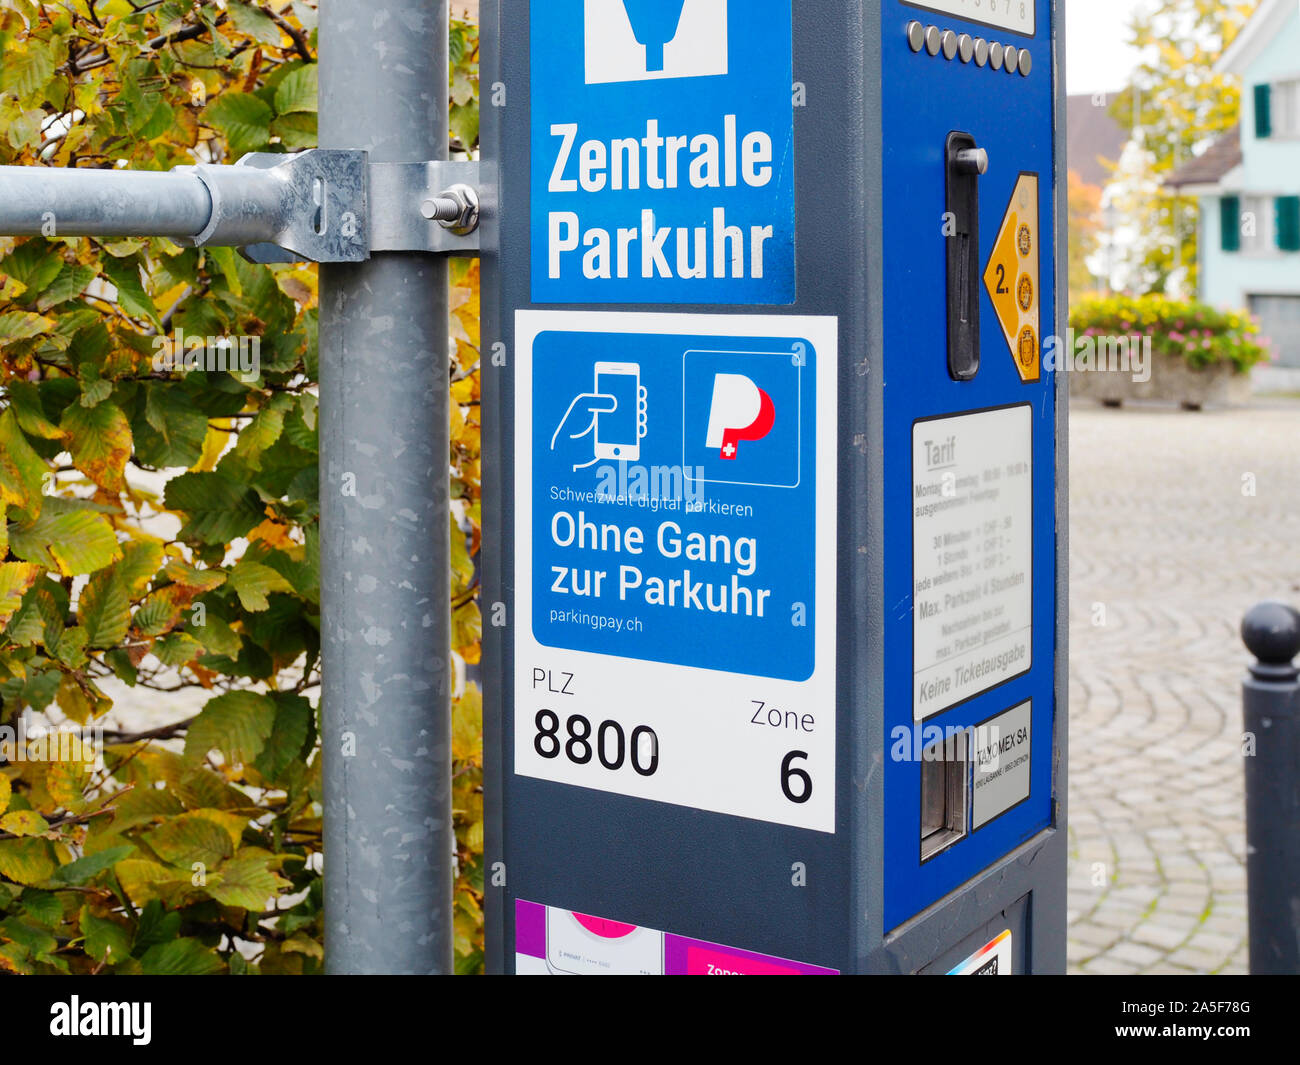 Zentrale Parkuhr in Thalwil mit parkingpay-Hinweis Foto Stock